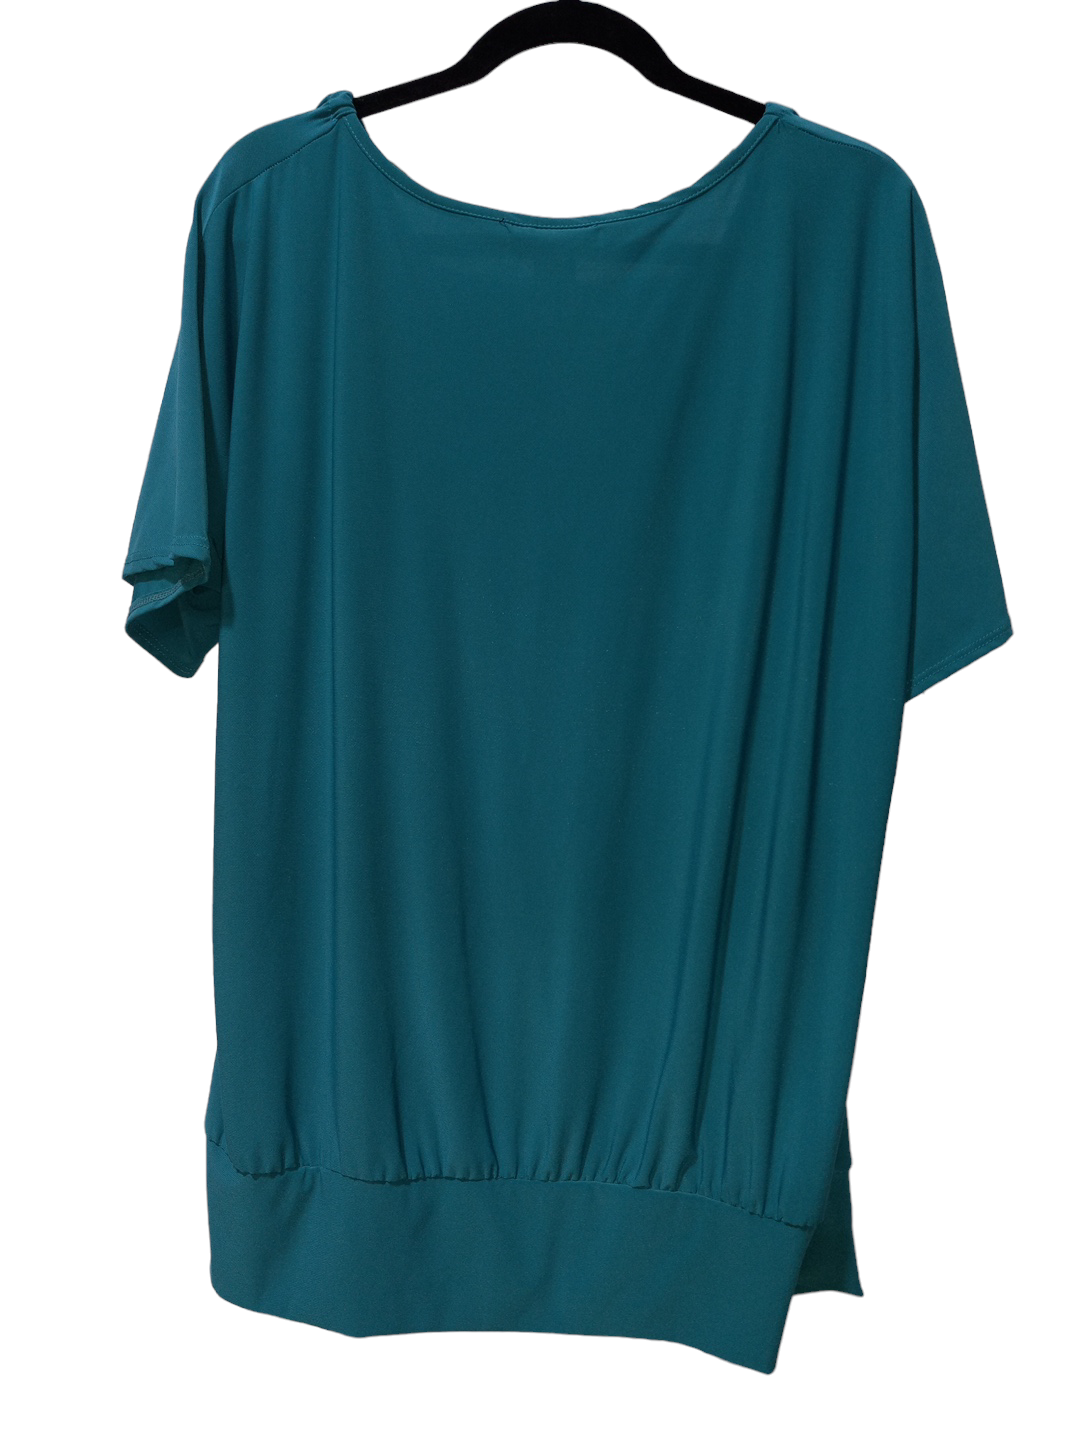 Blue Blouse Short Sleeve Acw Design, Size 3x